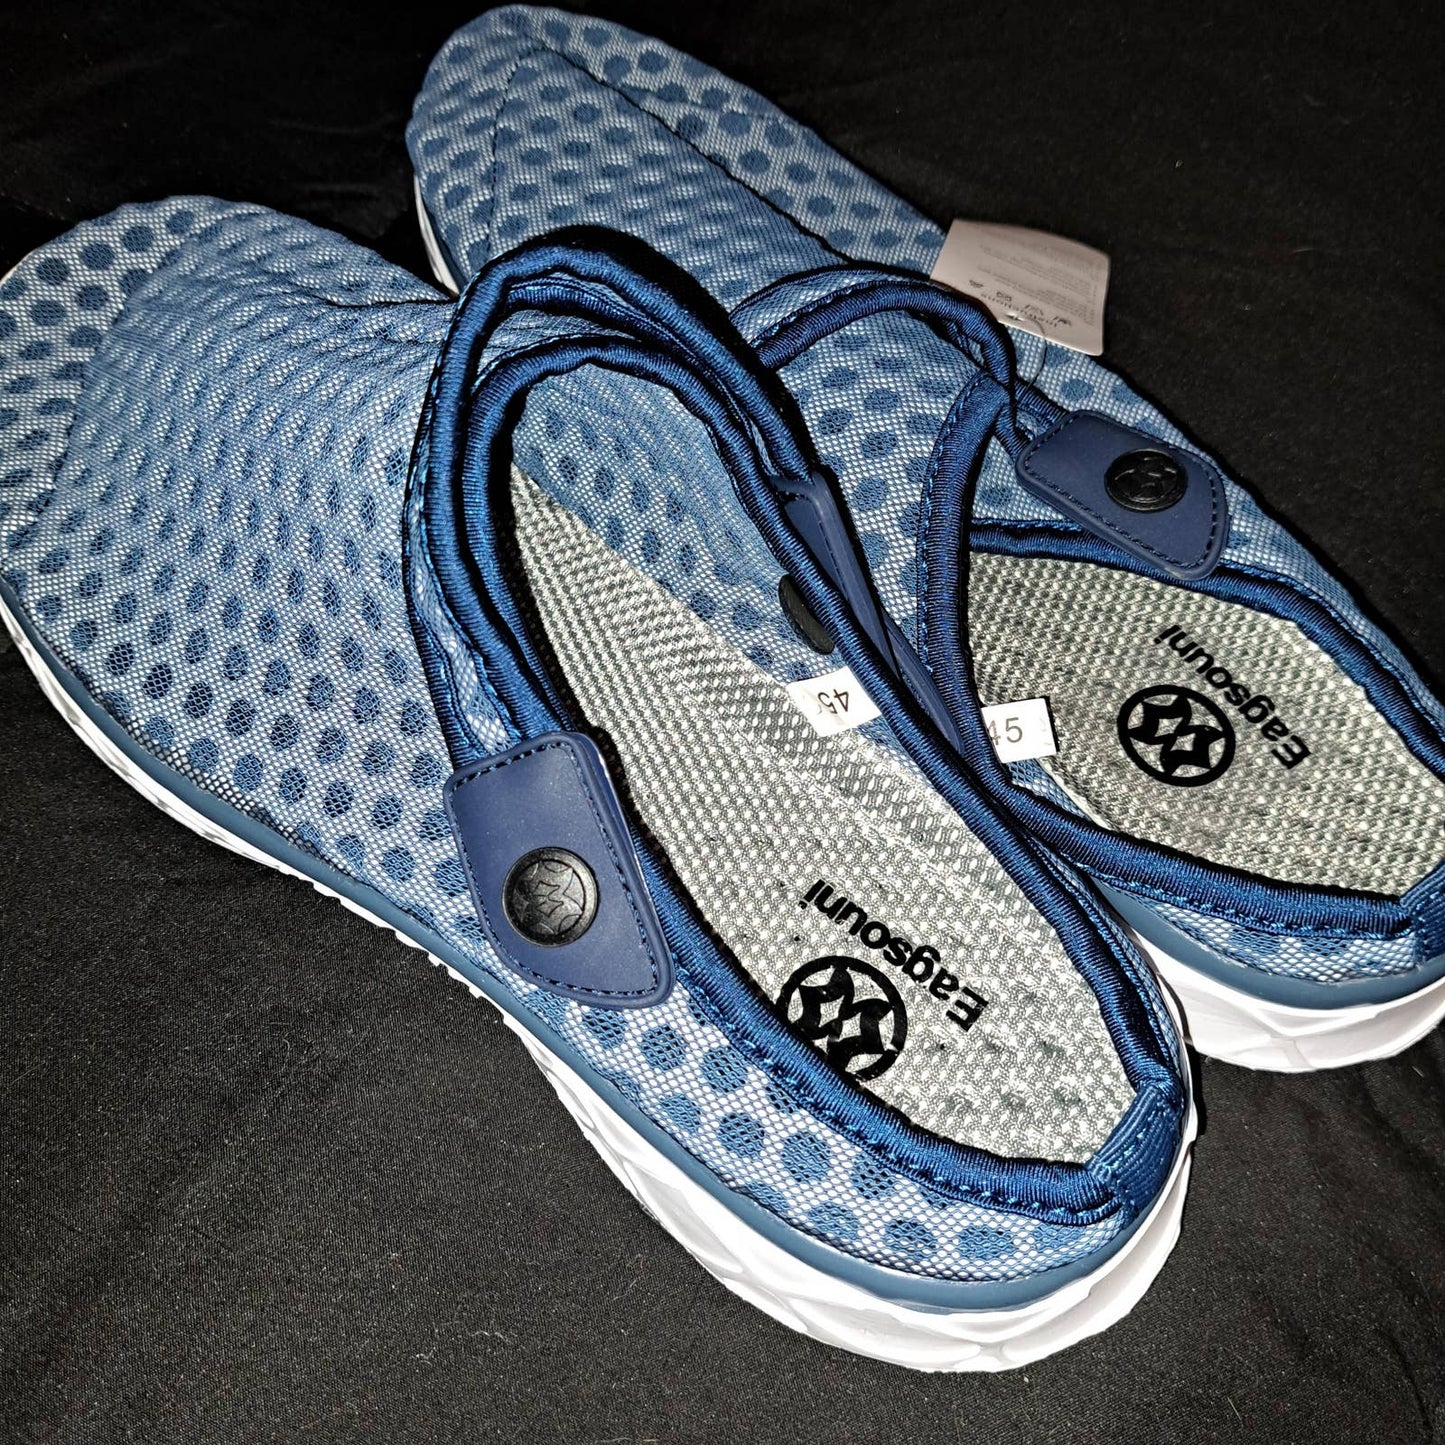 Eagsouni Unisex Garden Clogs Mesh Slippers Sandals SZ 11.5